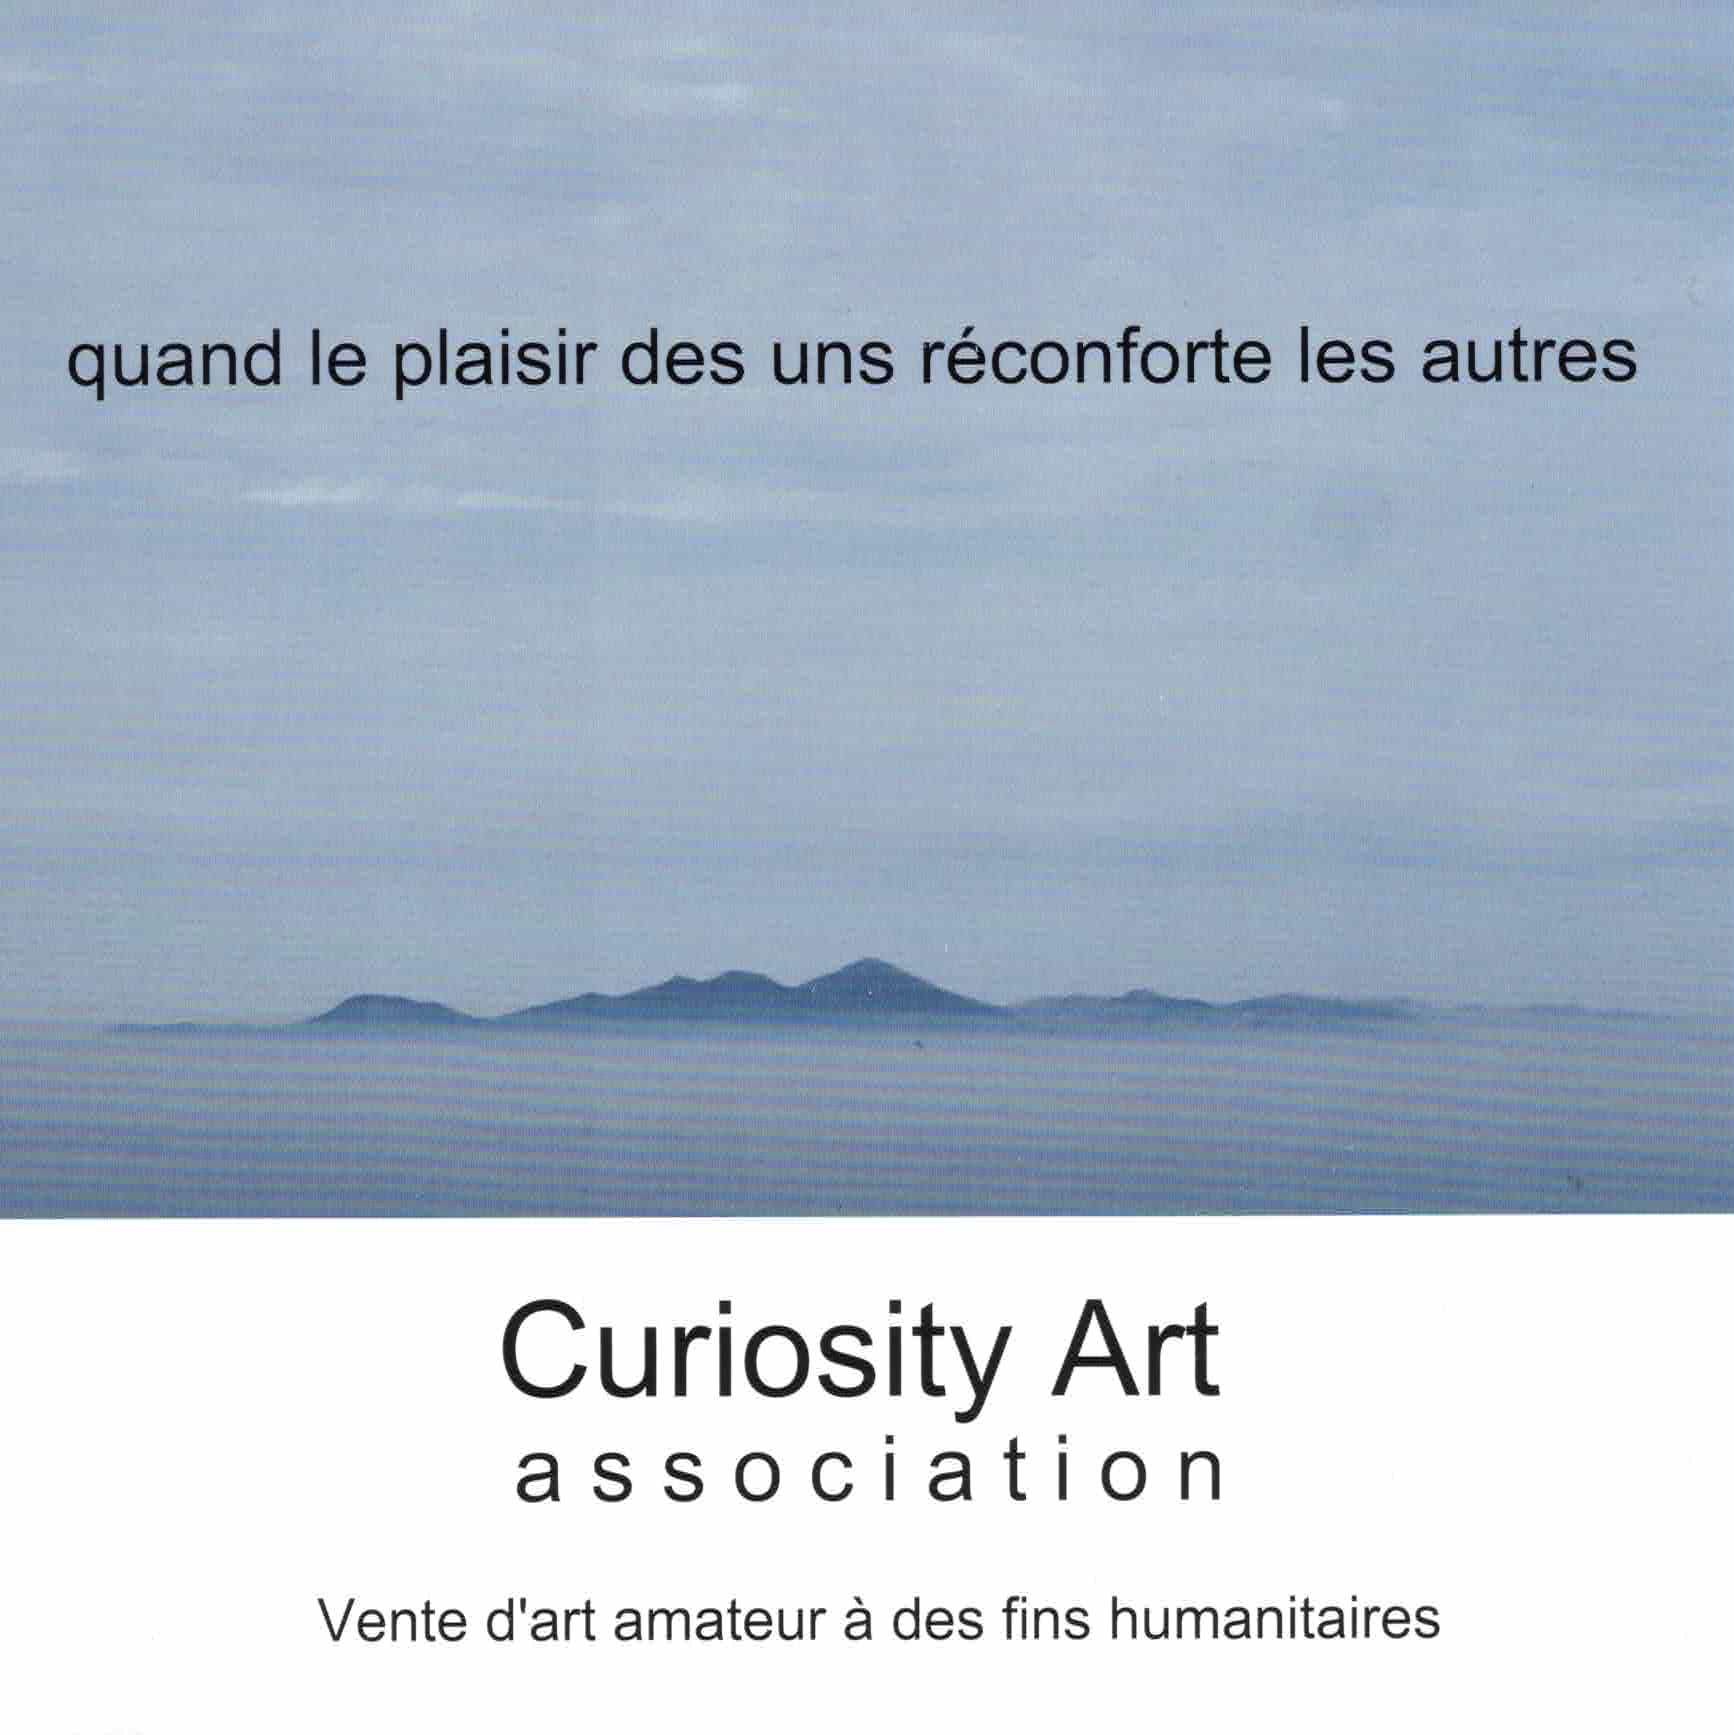 Curiosity Art